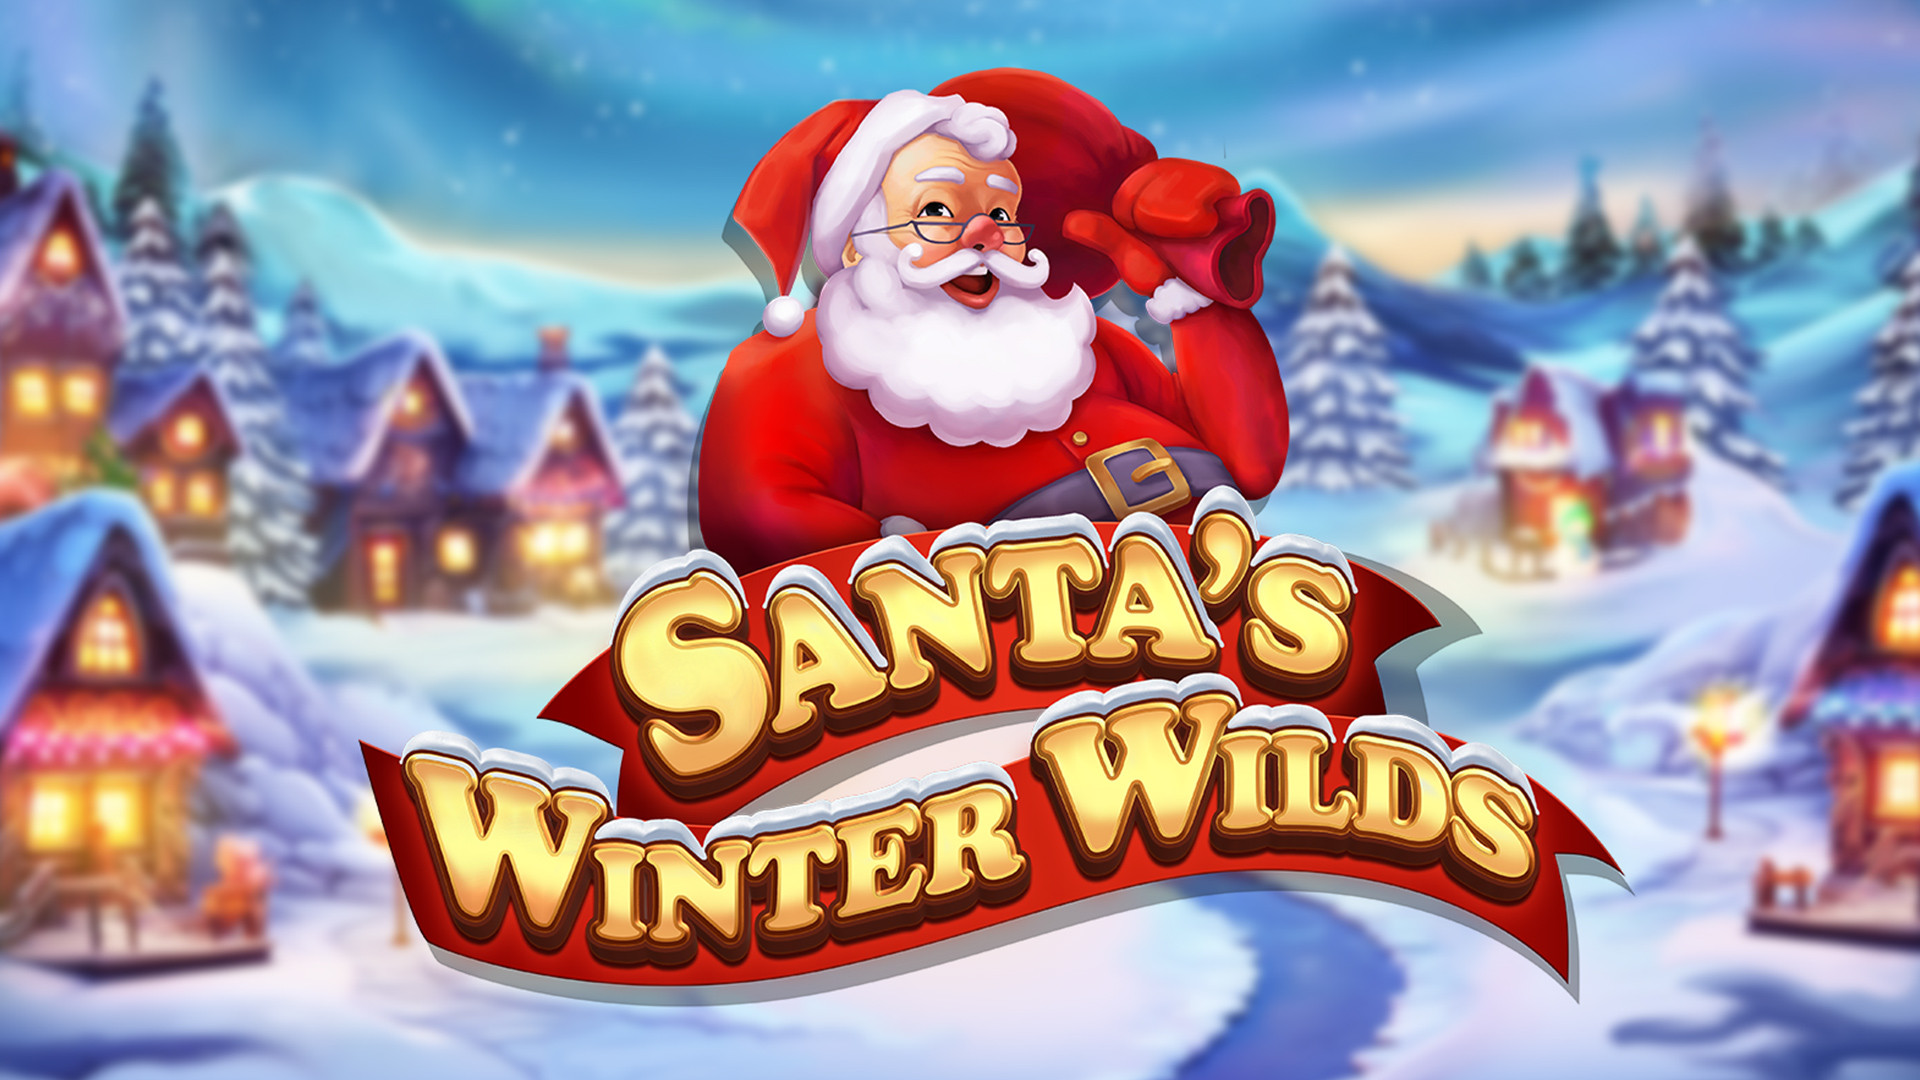 Santa's Winter Wilds